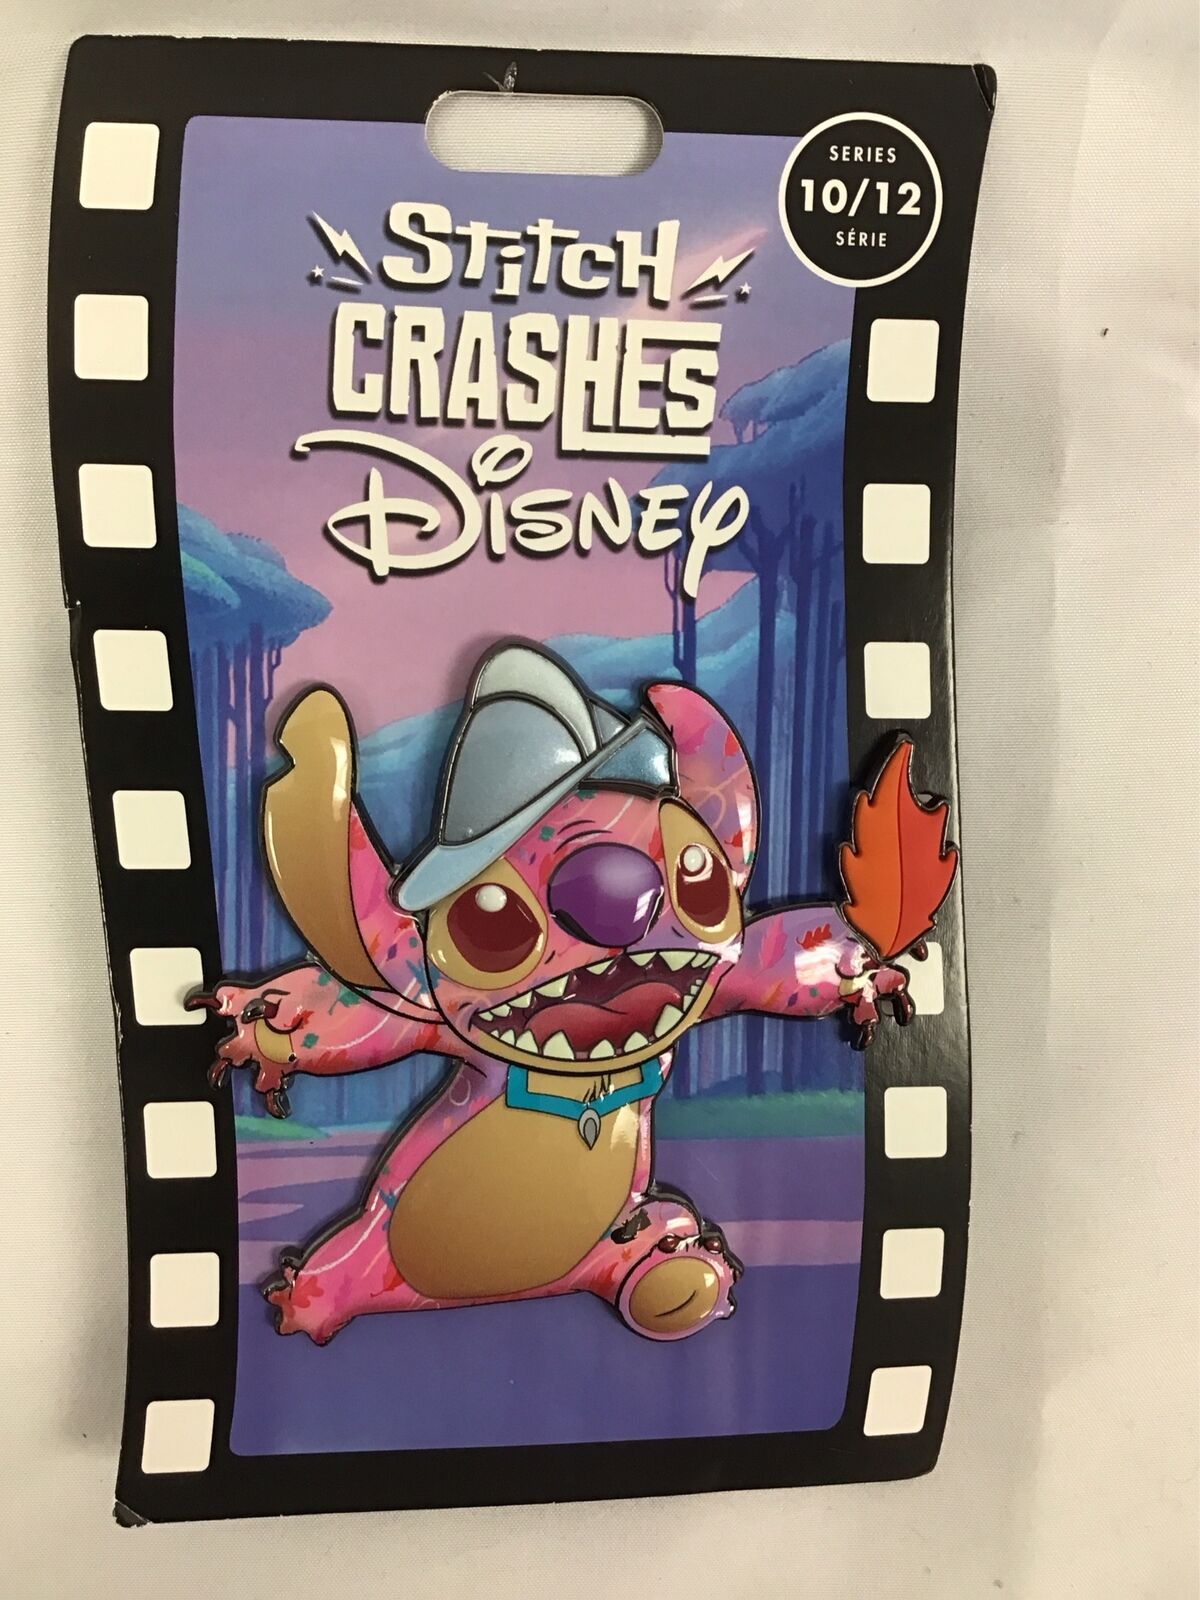 Stitch Crashes Disney Pocahontas Pin Series 10/12, Brand New